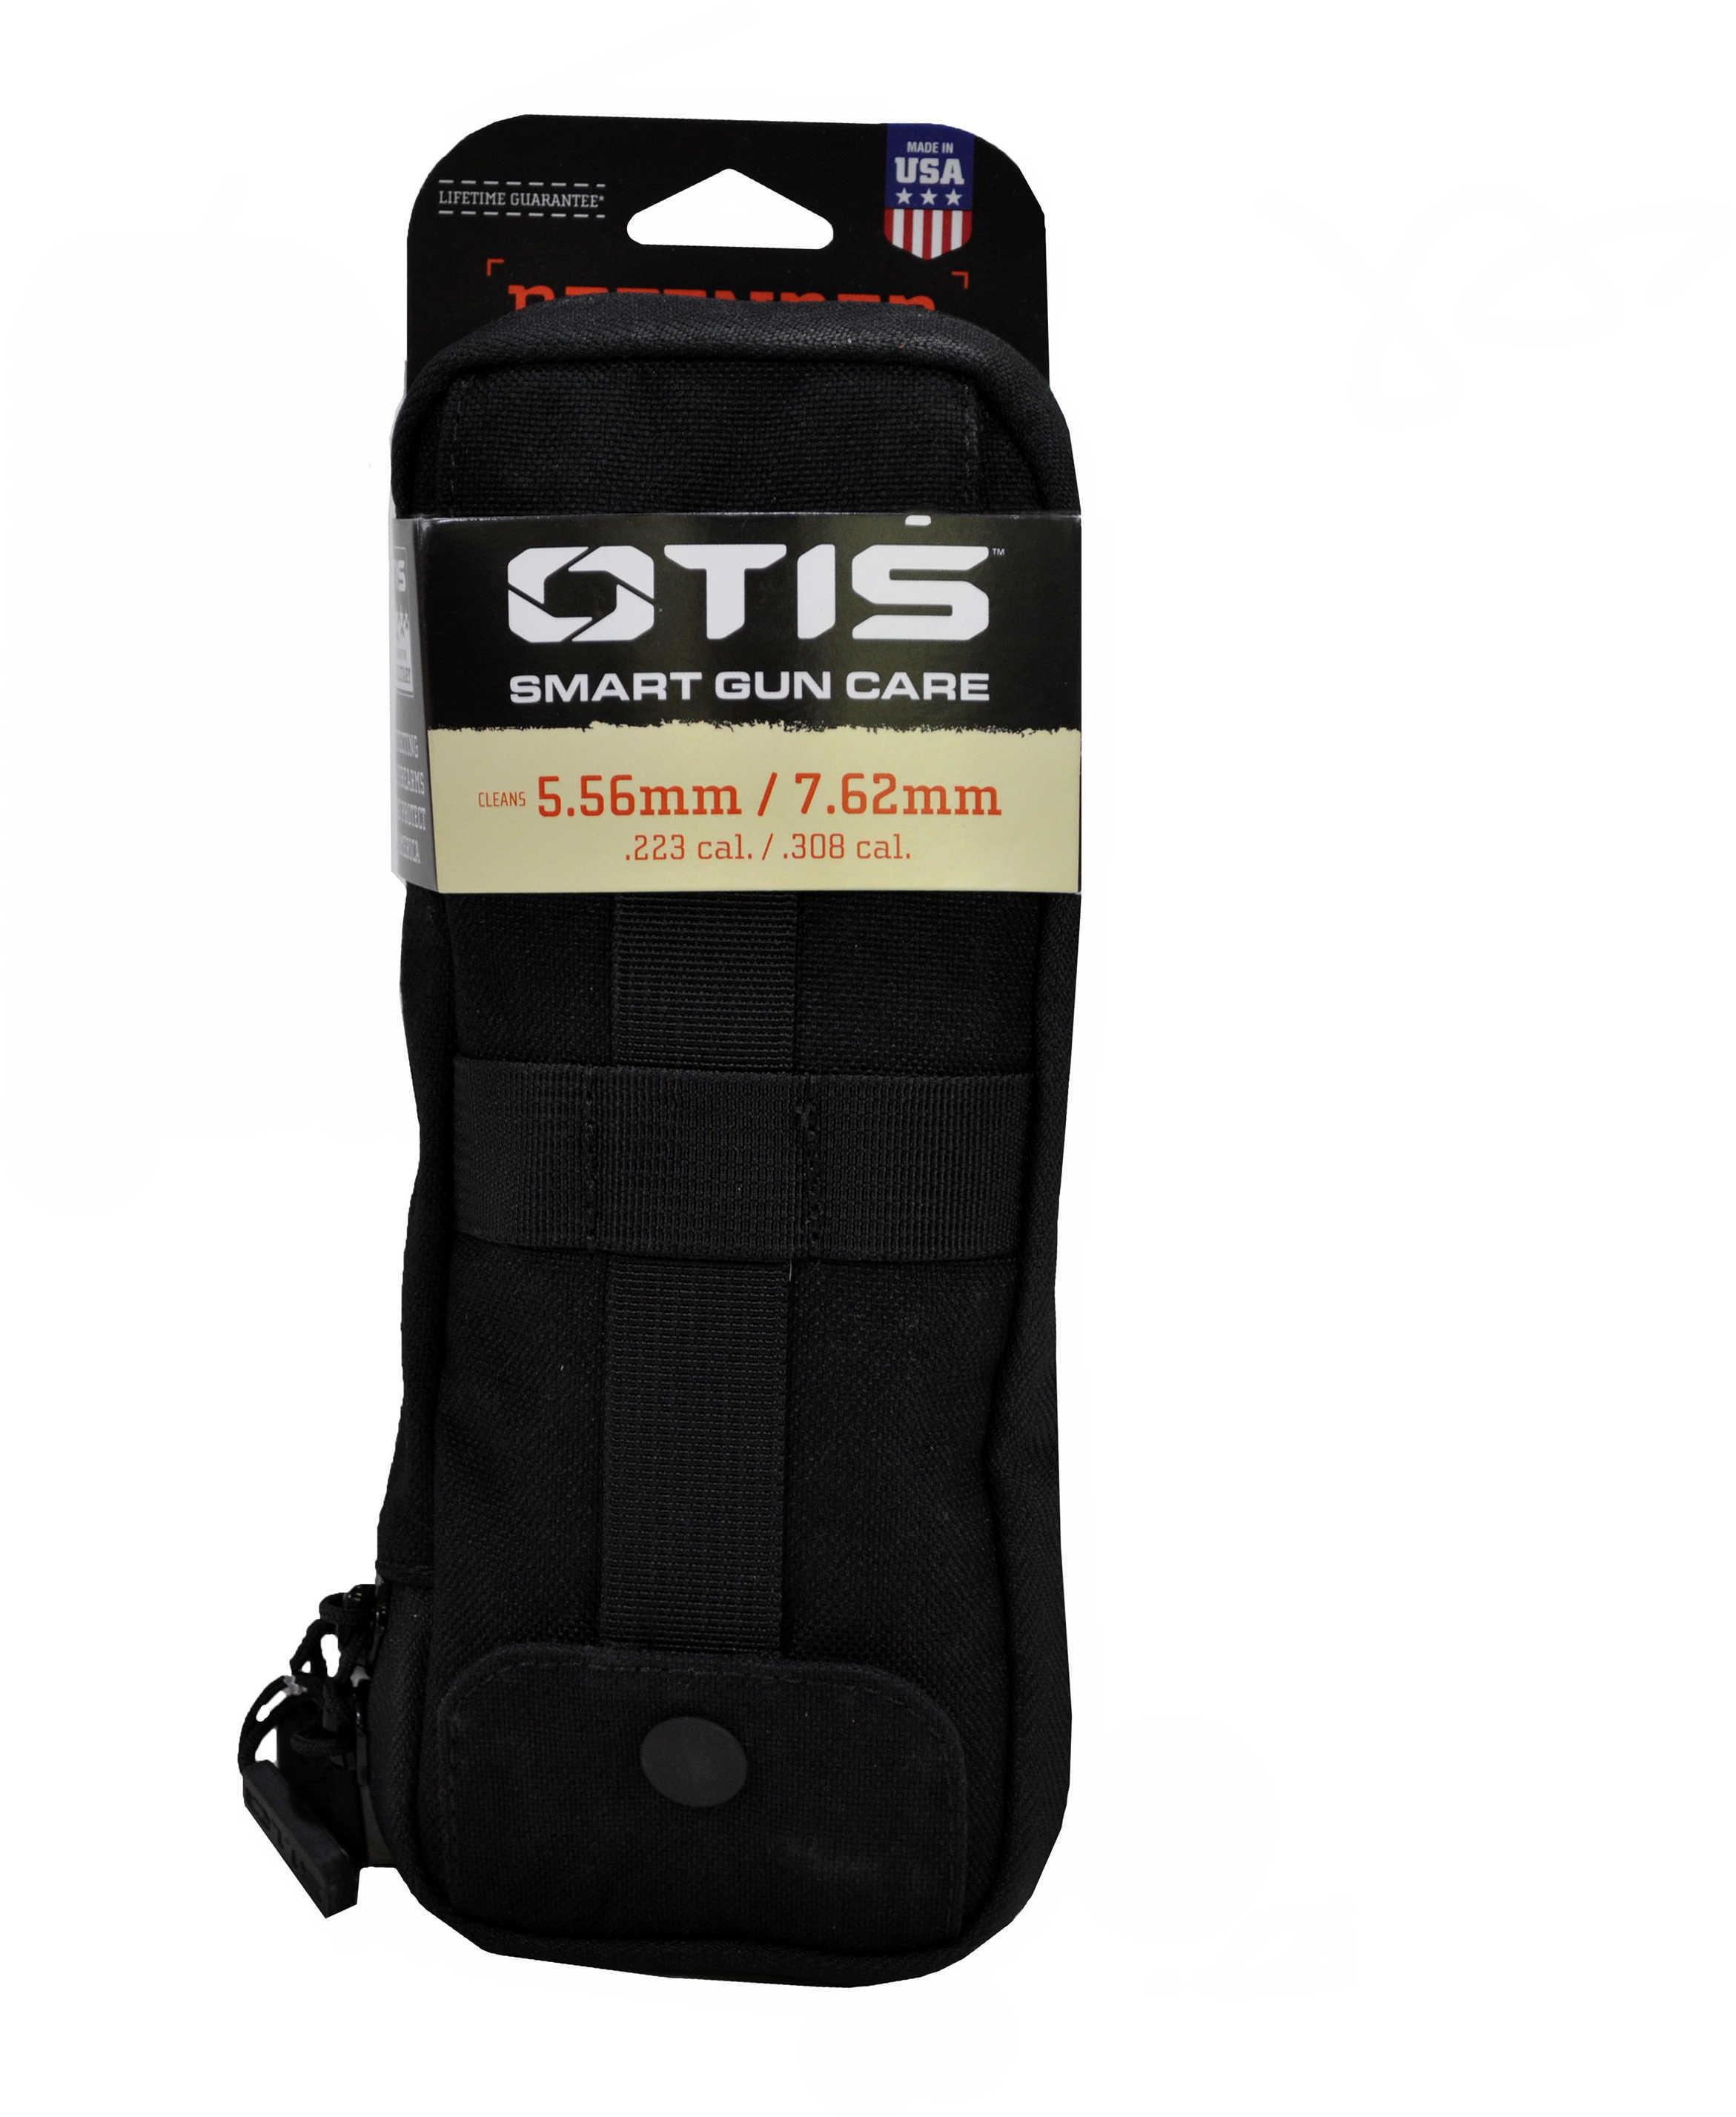 Otis Defender Series Cleaning System - 5.56mm/7.62mm